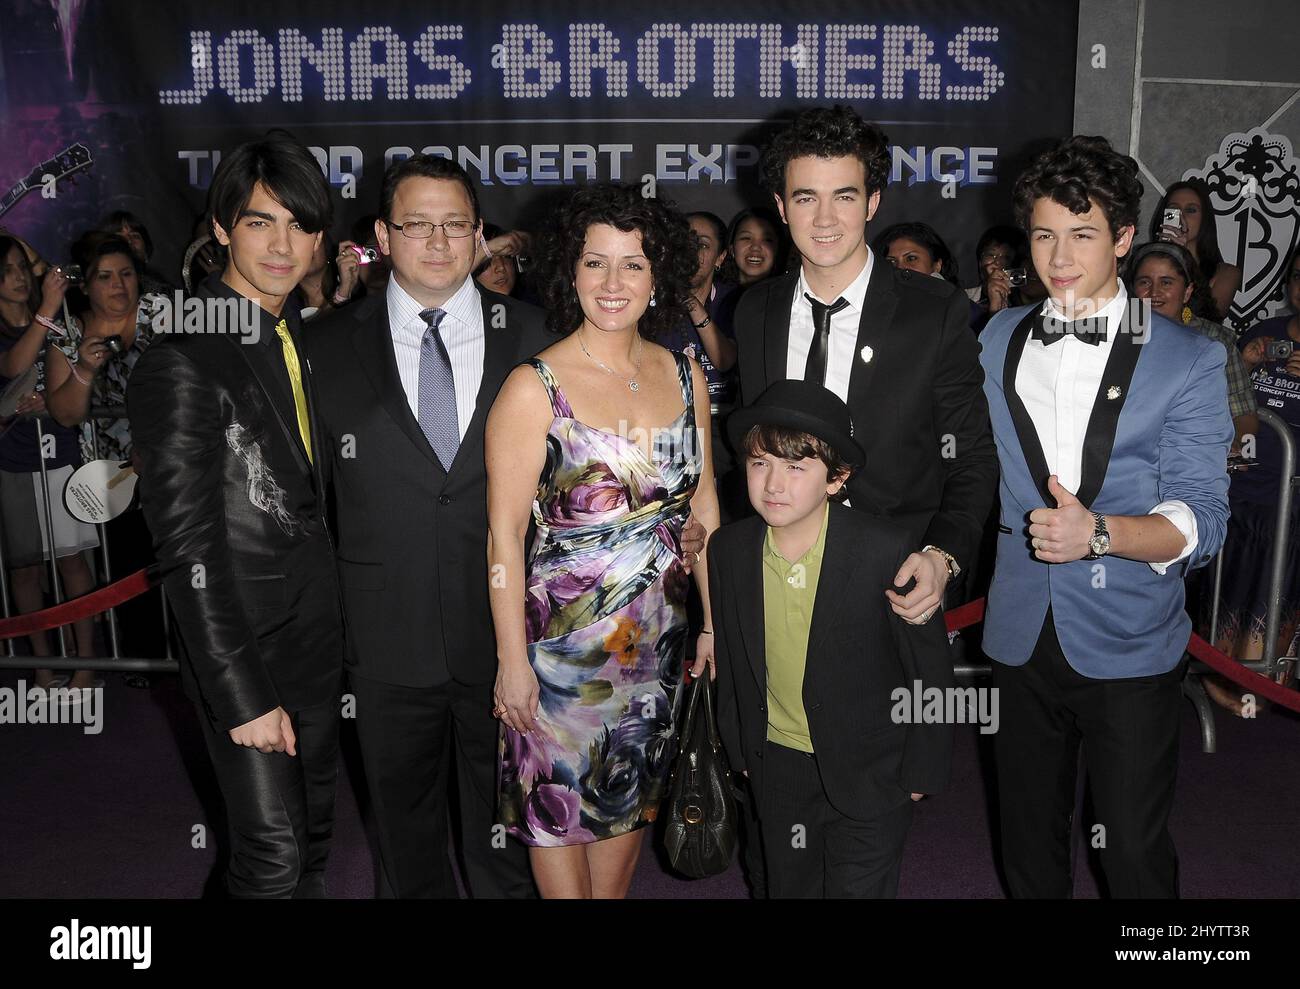 Frankie Jonas Rocks Blue Hair at Jonas Brothers Concert - wide 1